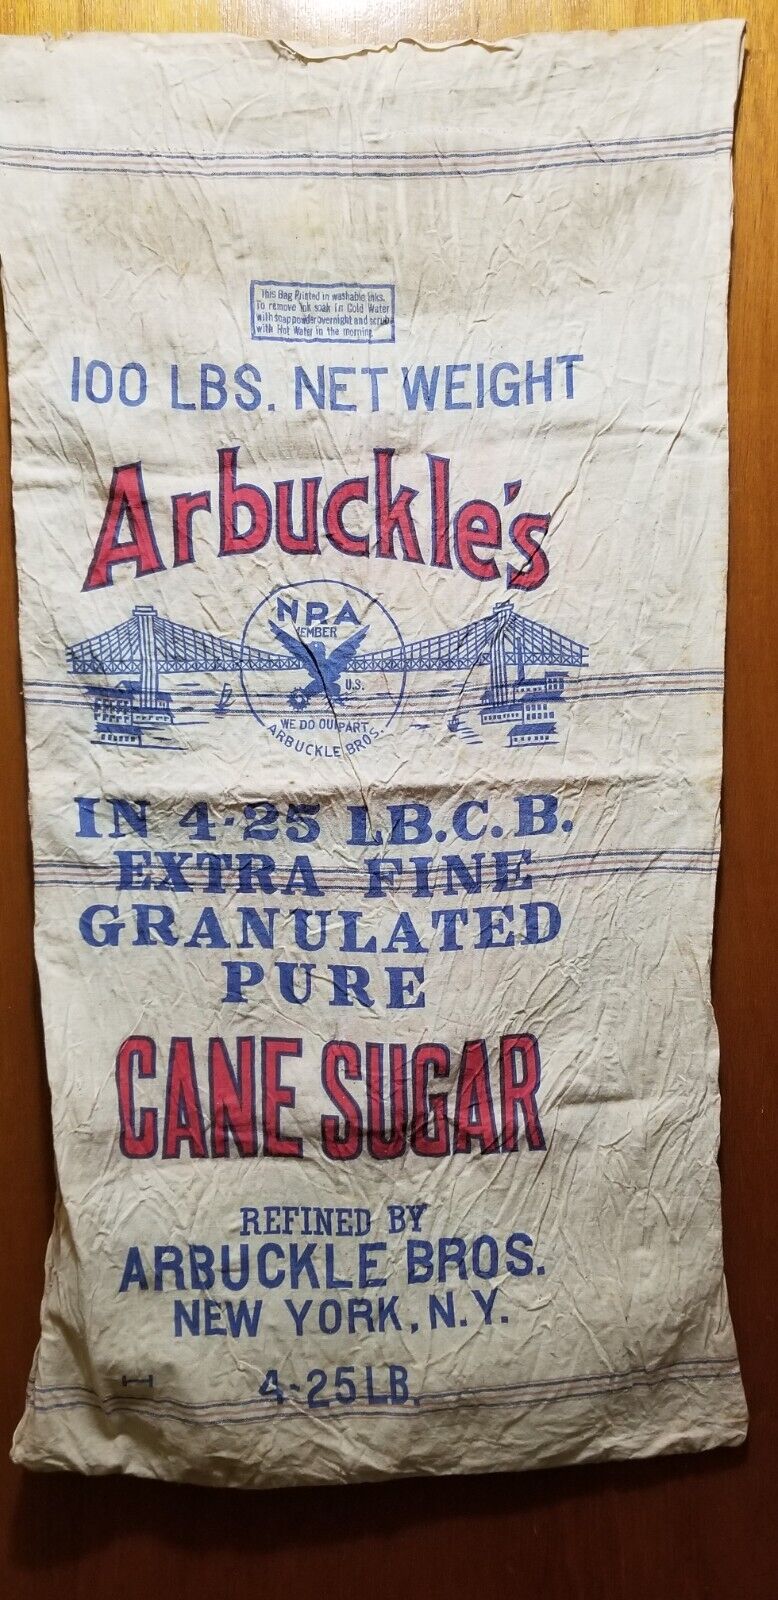 Vintage Arbuckle's Hundred Pound Cane Sugar Bag, Nice Bright Colors.